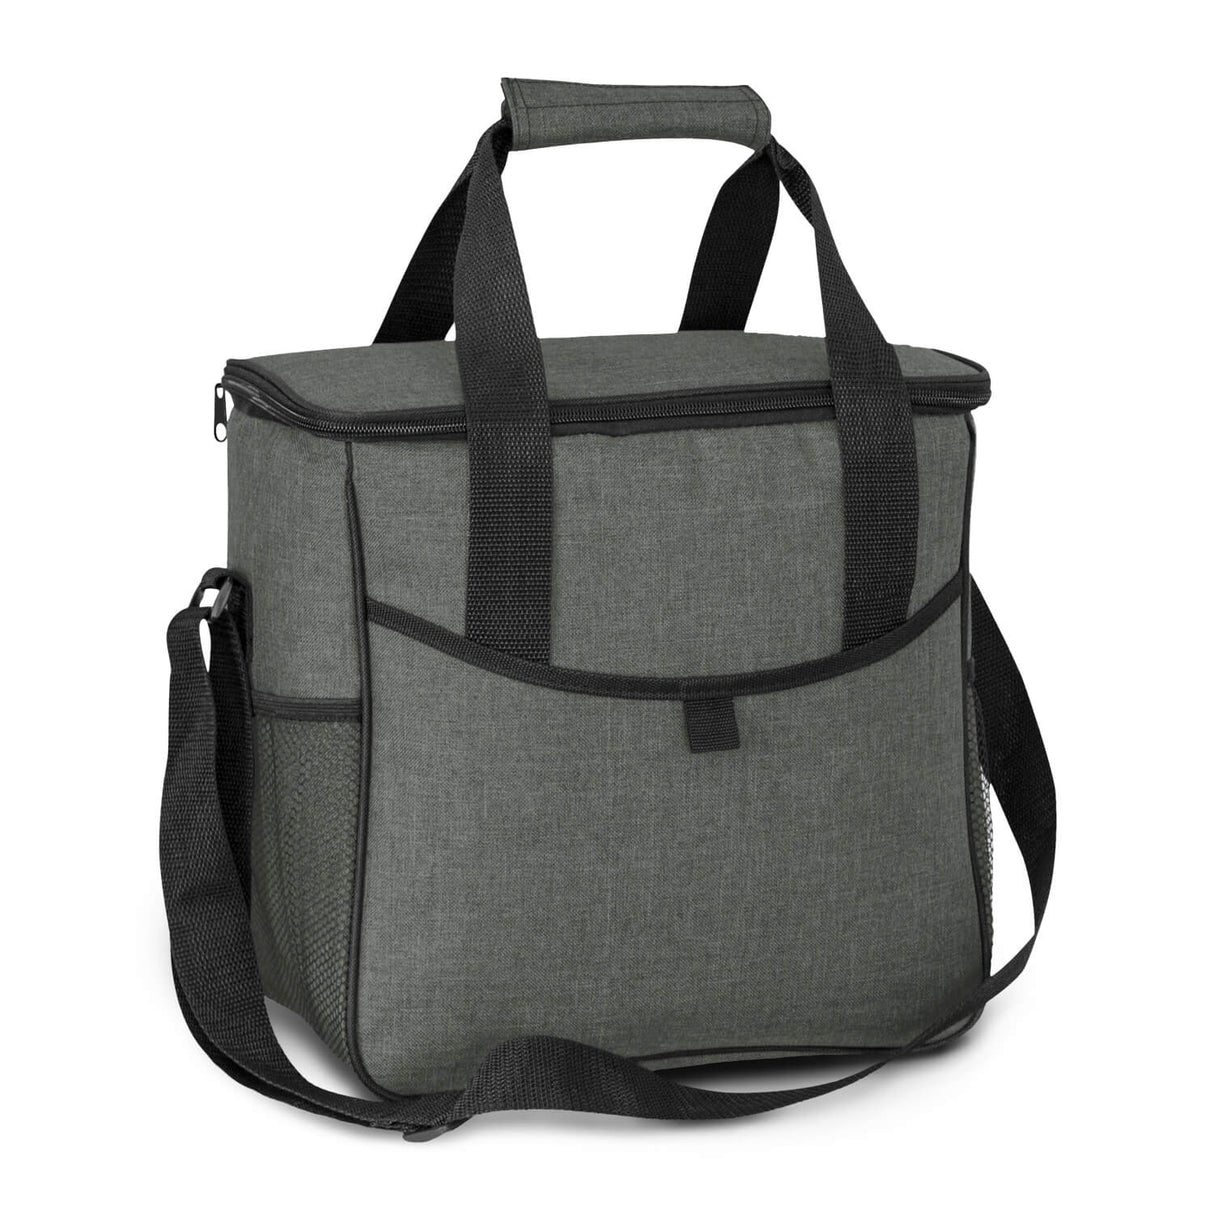 Nordic Elite Cooler Bag - Printed